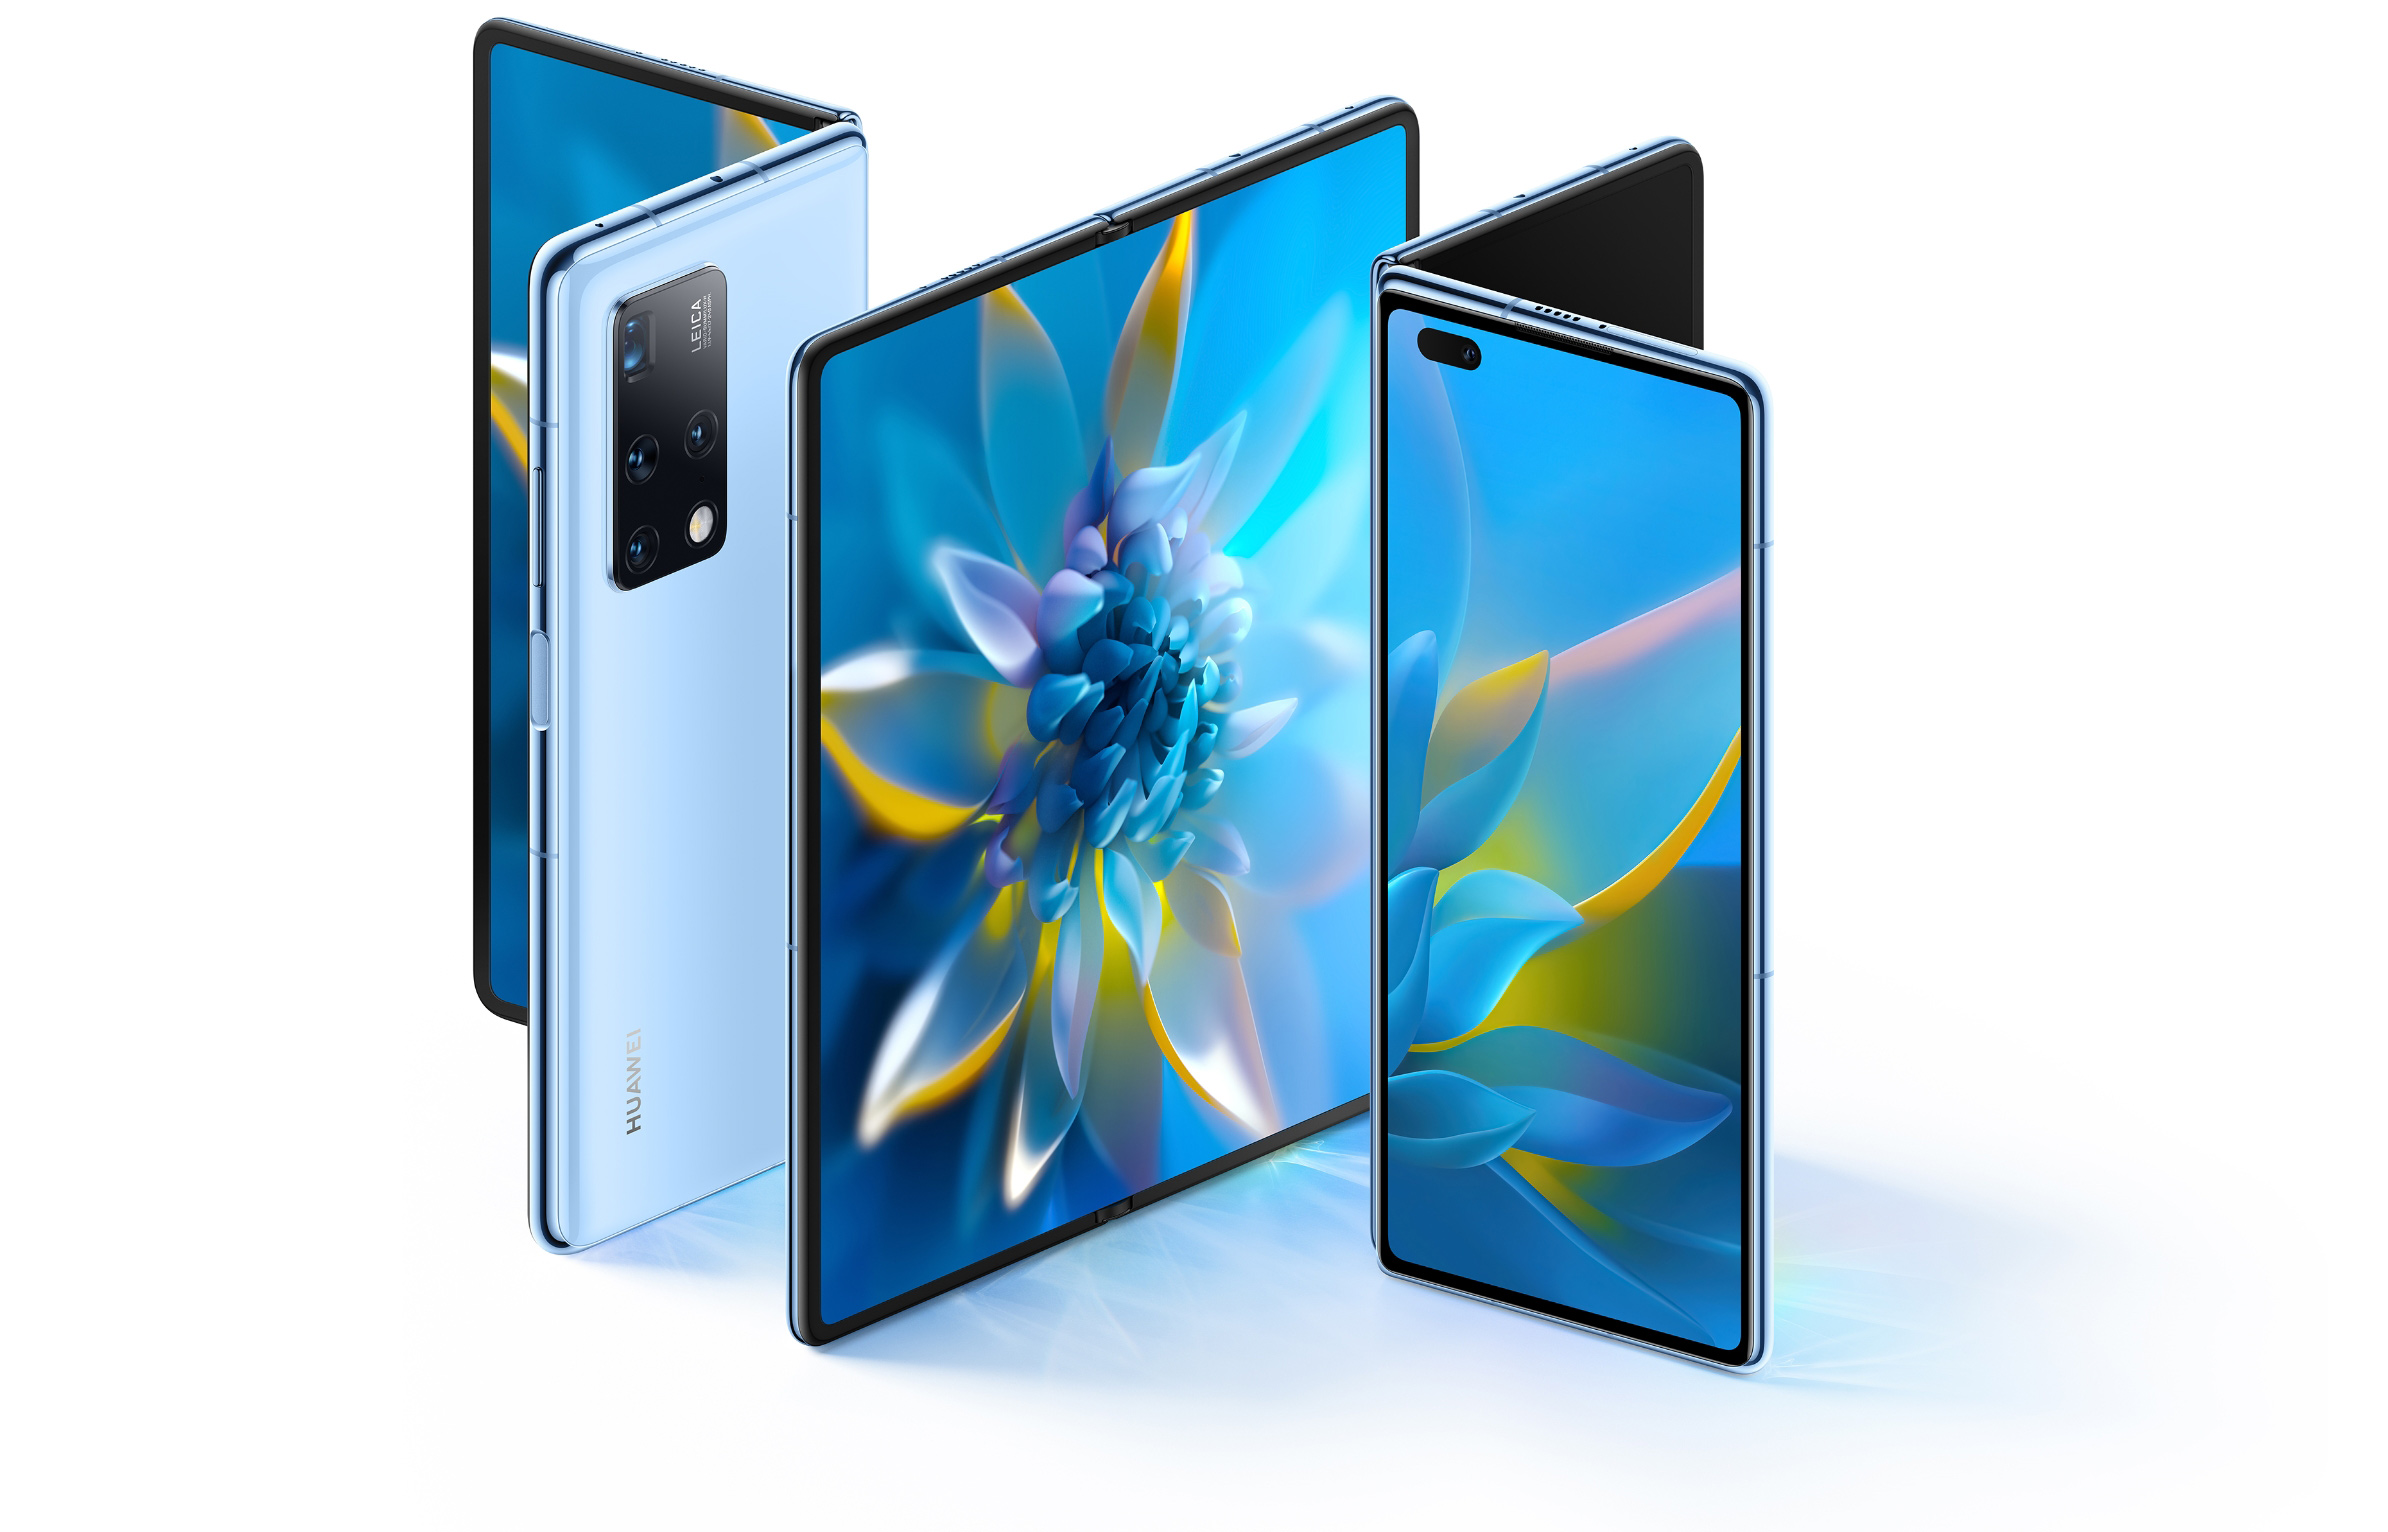 Next-generation Huawei Mate foldable smartphone details emerge - NotebookCheck.net News